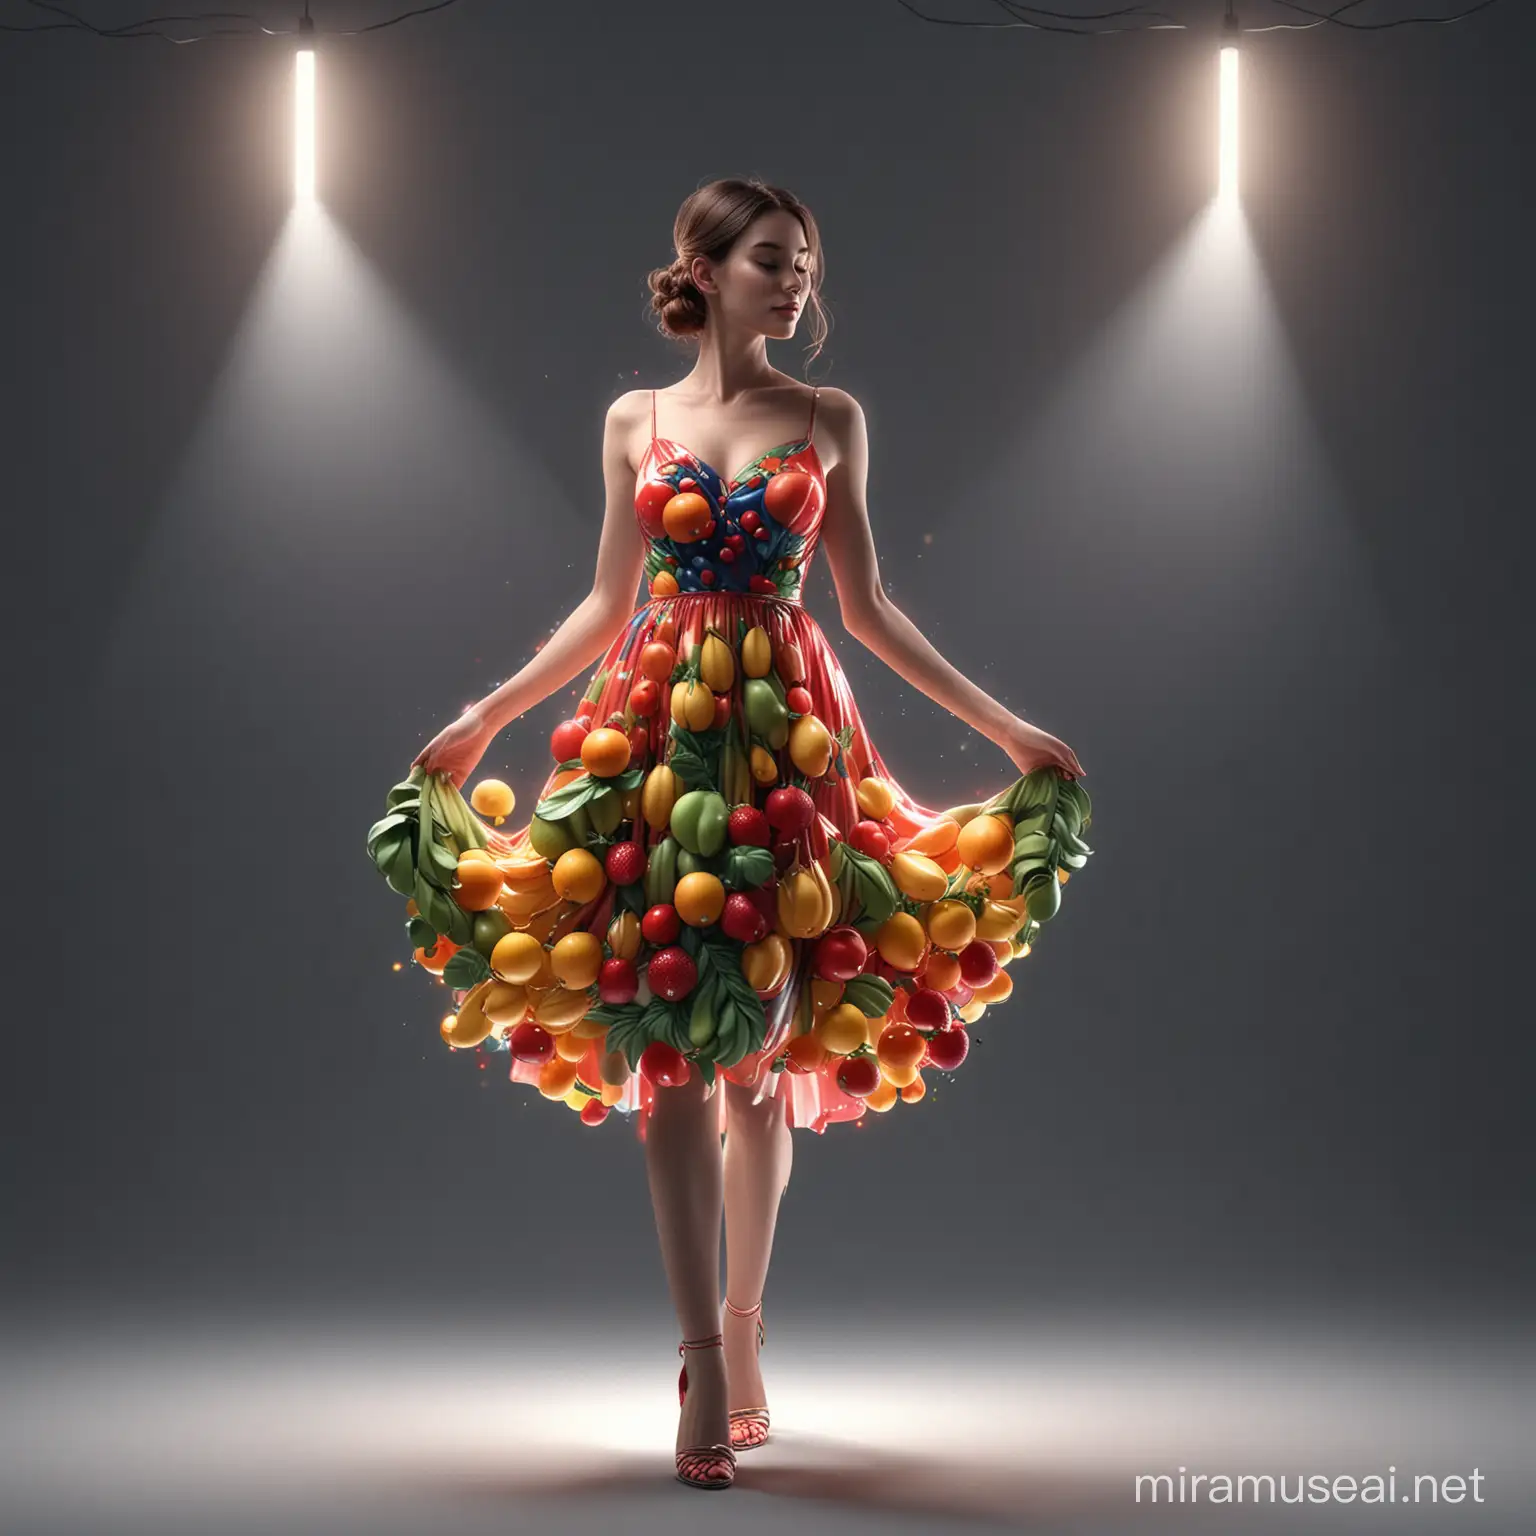 Midnight Fantasy Glowing Woman in Fruit Dress